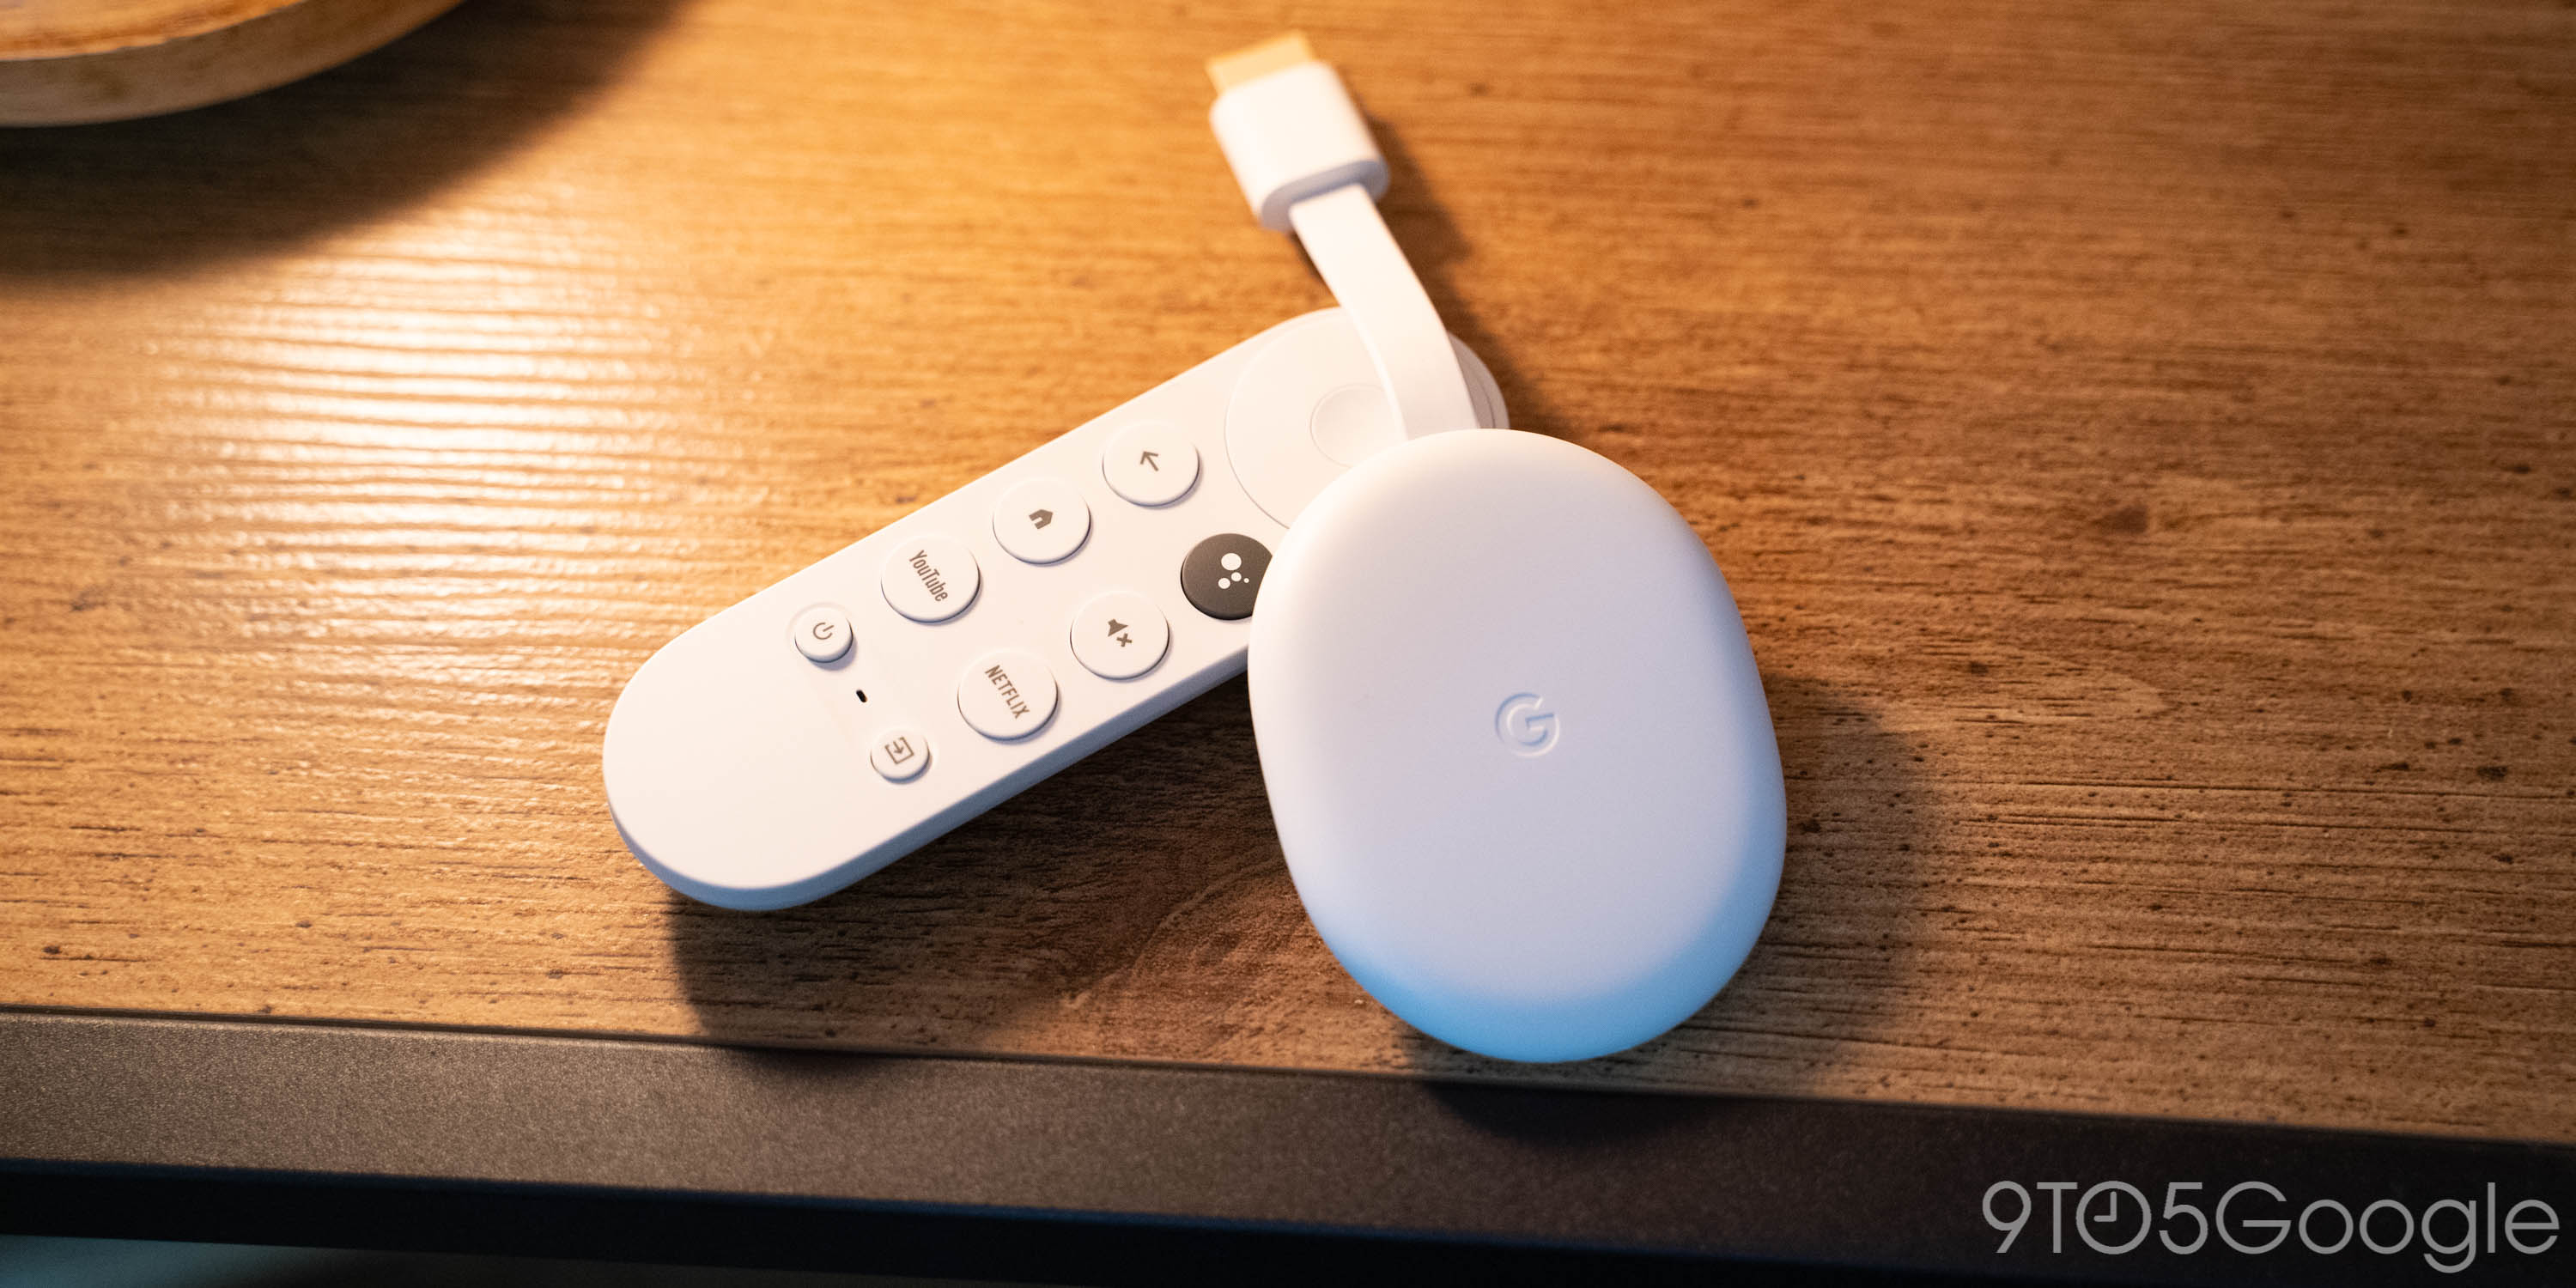 Google's new Chromecast works with USB - 9to5Google